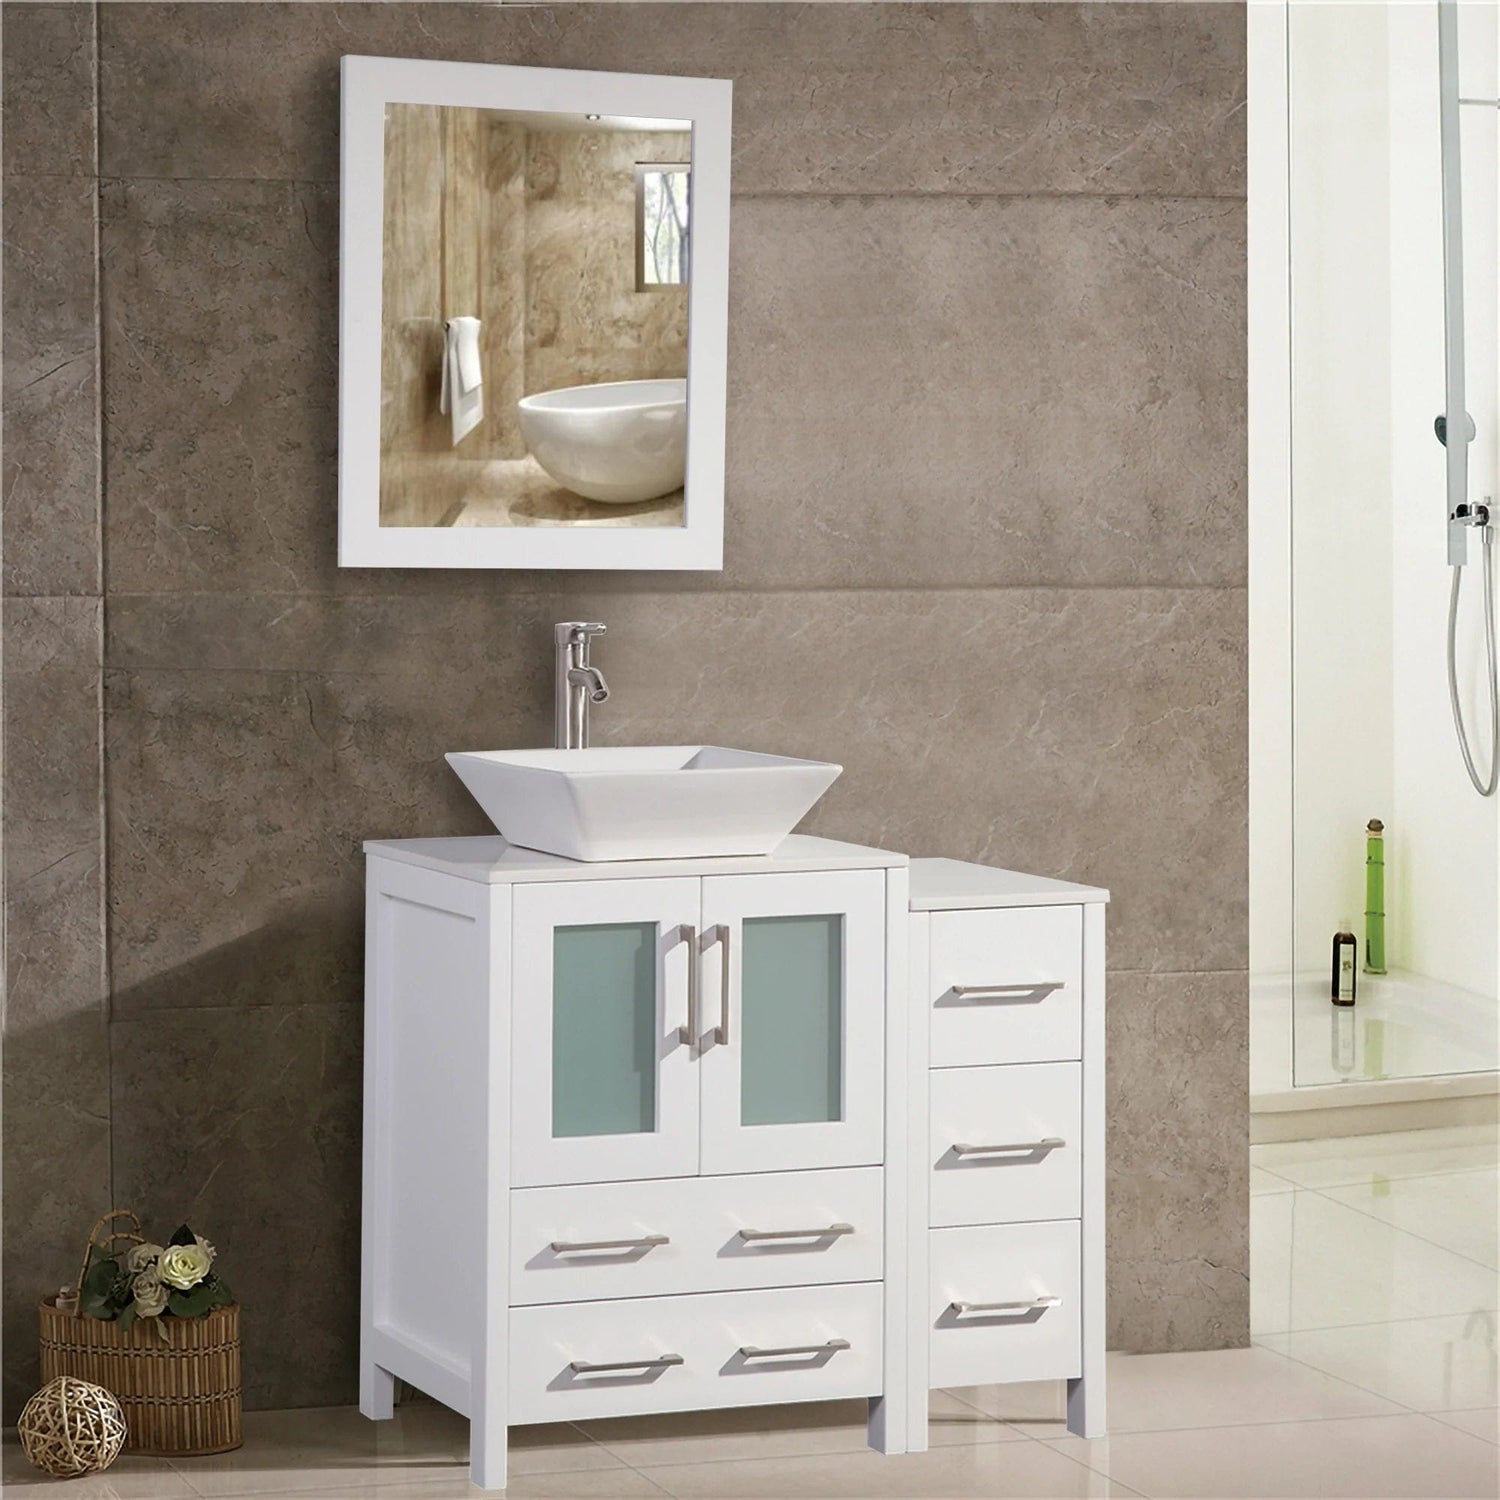 36 in. Single Sink Bathroom Vanity Combo Set in White - Decohub Home